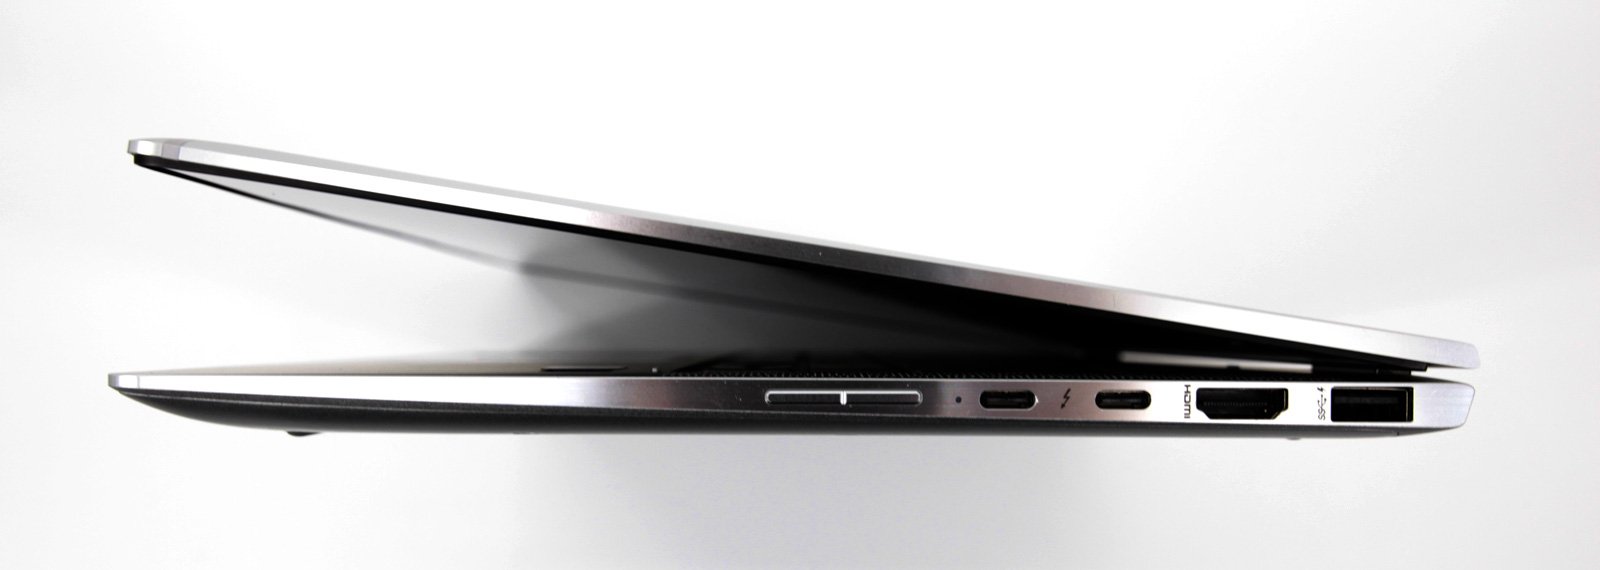 HP EliteBook x360 1040 G5 Touch 2 in 1: Intel i7, 256GB SSD, 16GB RAM, Warranty - CruiseTech